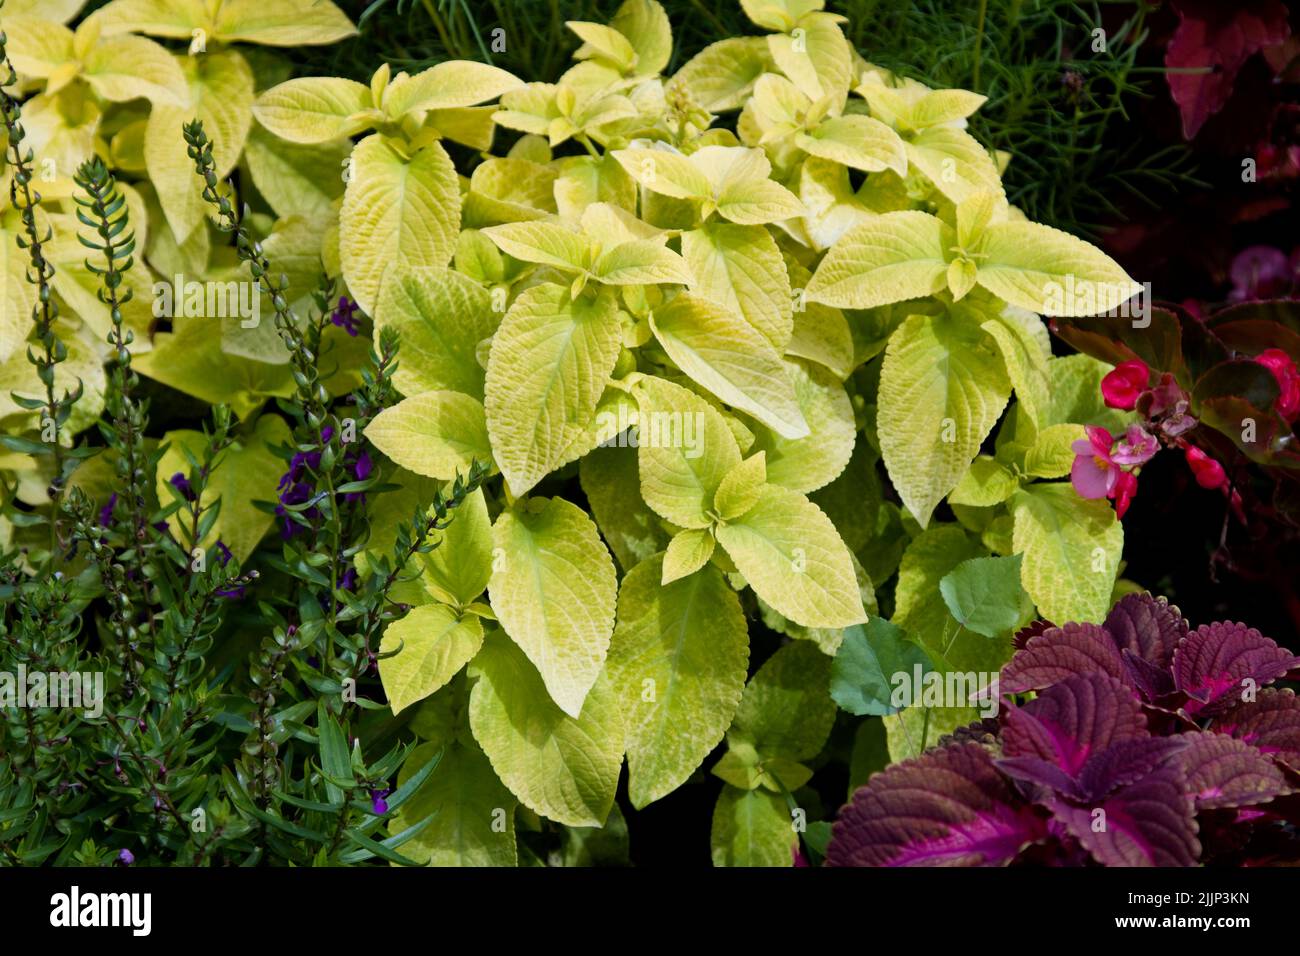 Vibrant and lush Coleus bush. Stock Photo